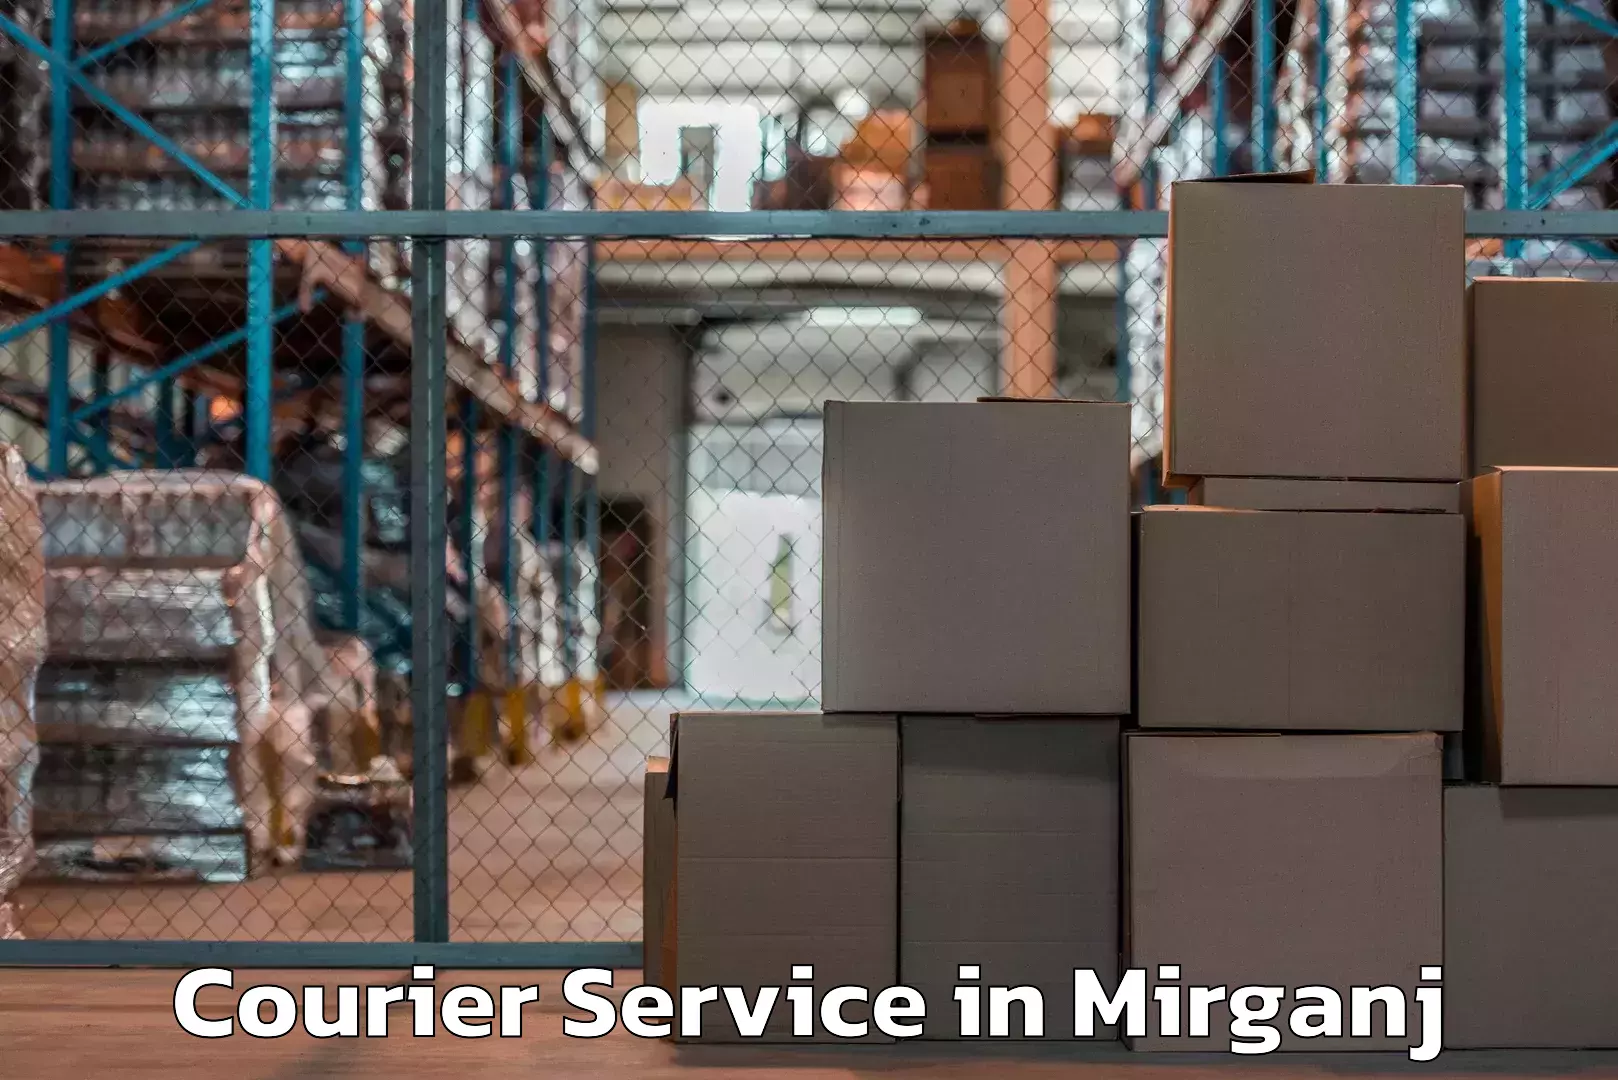 Customer-focused courier in Mirganj